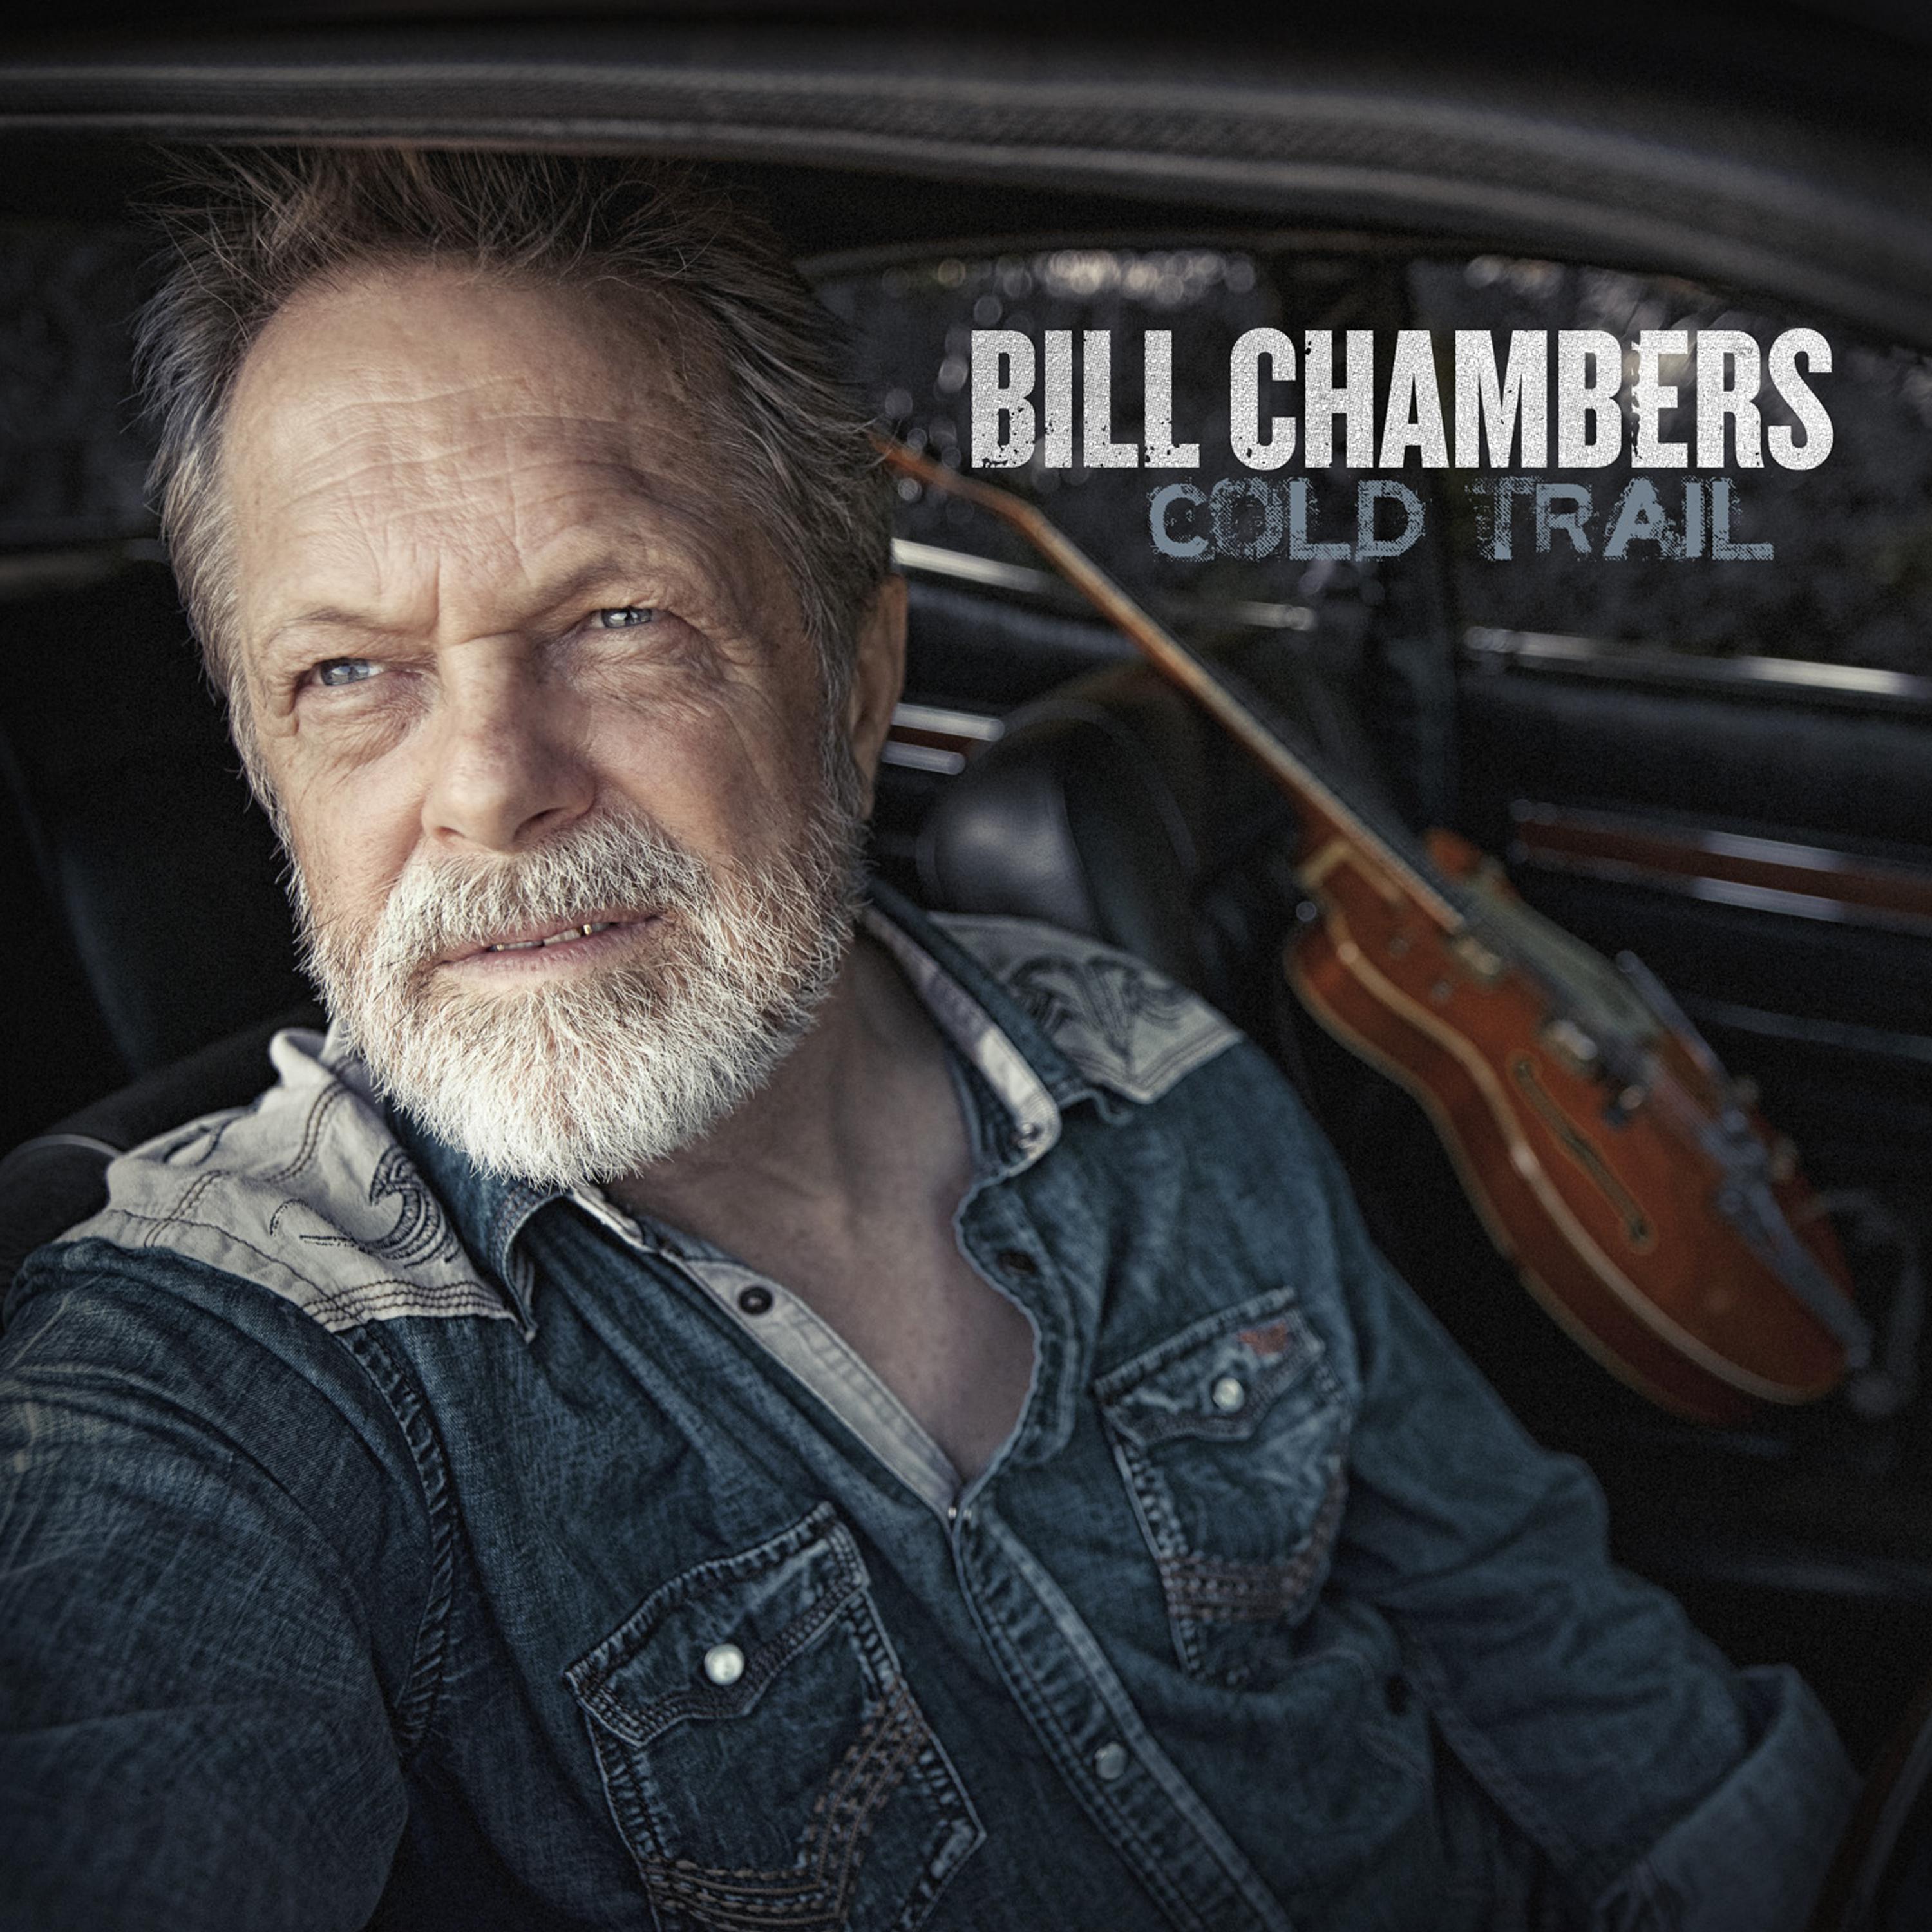 Bill Chambers - The Road Tonight